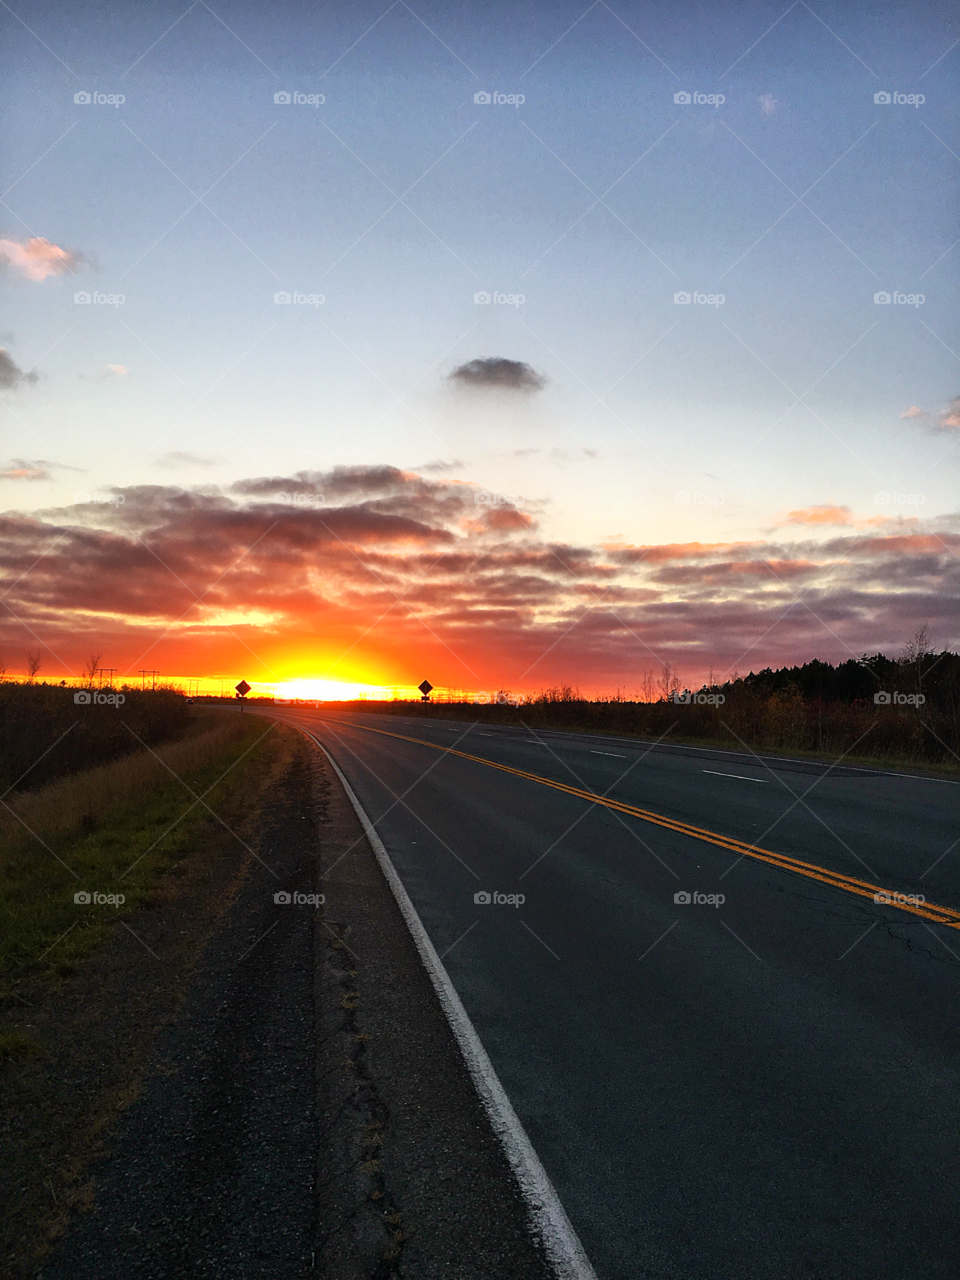 November sunset on the highway 